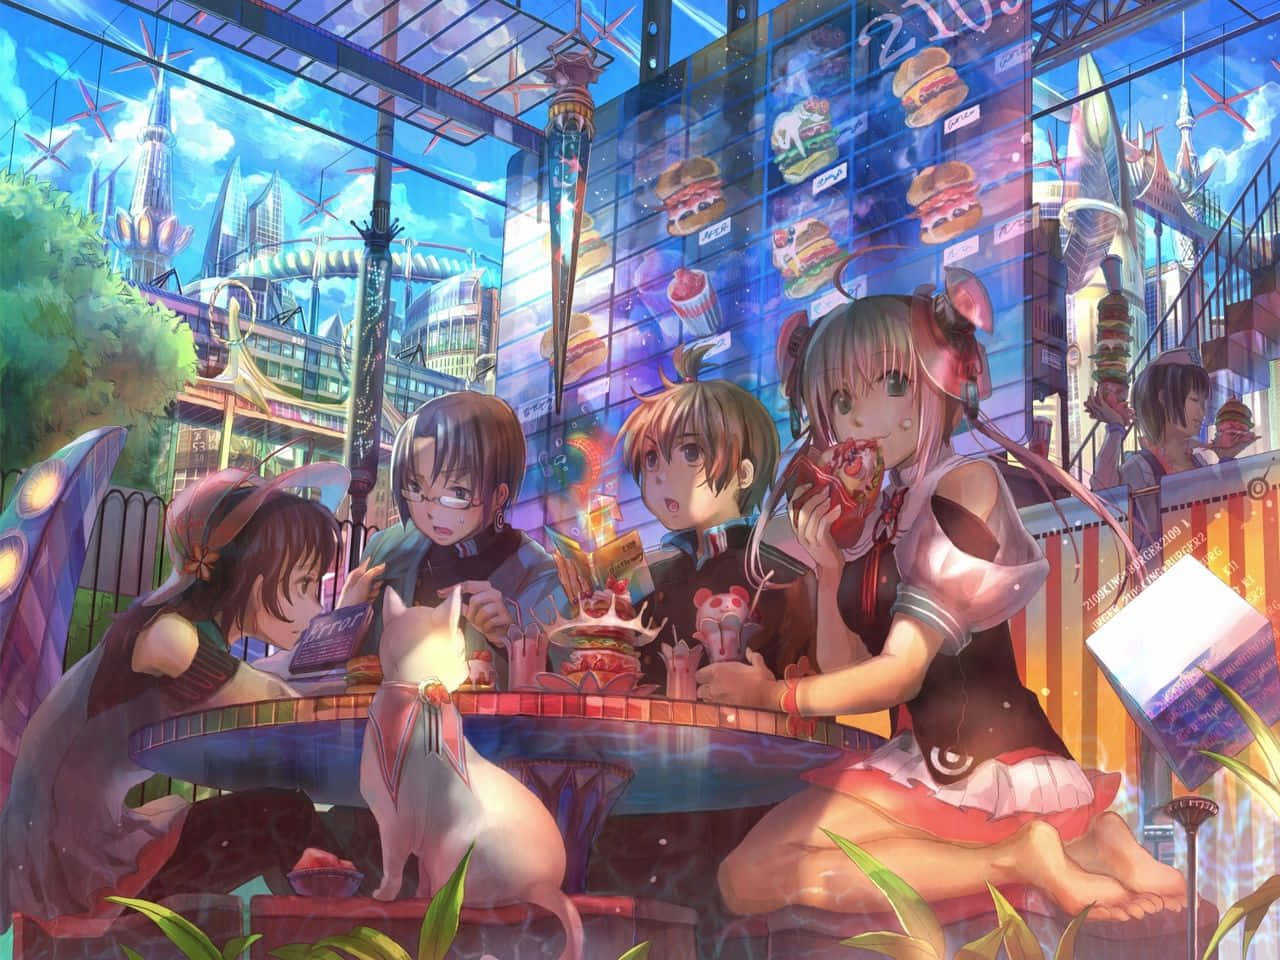 Download wallpaper 2560x1600 girl cafe anime art cartoon widescreen  1610 hd background